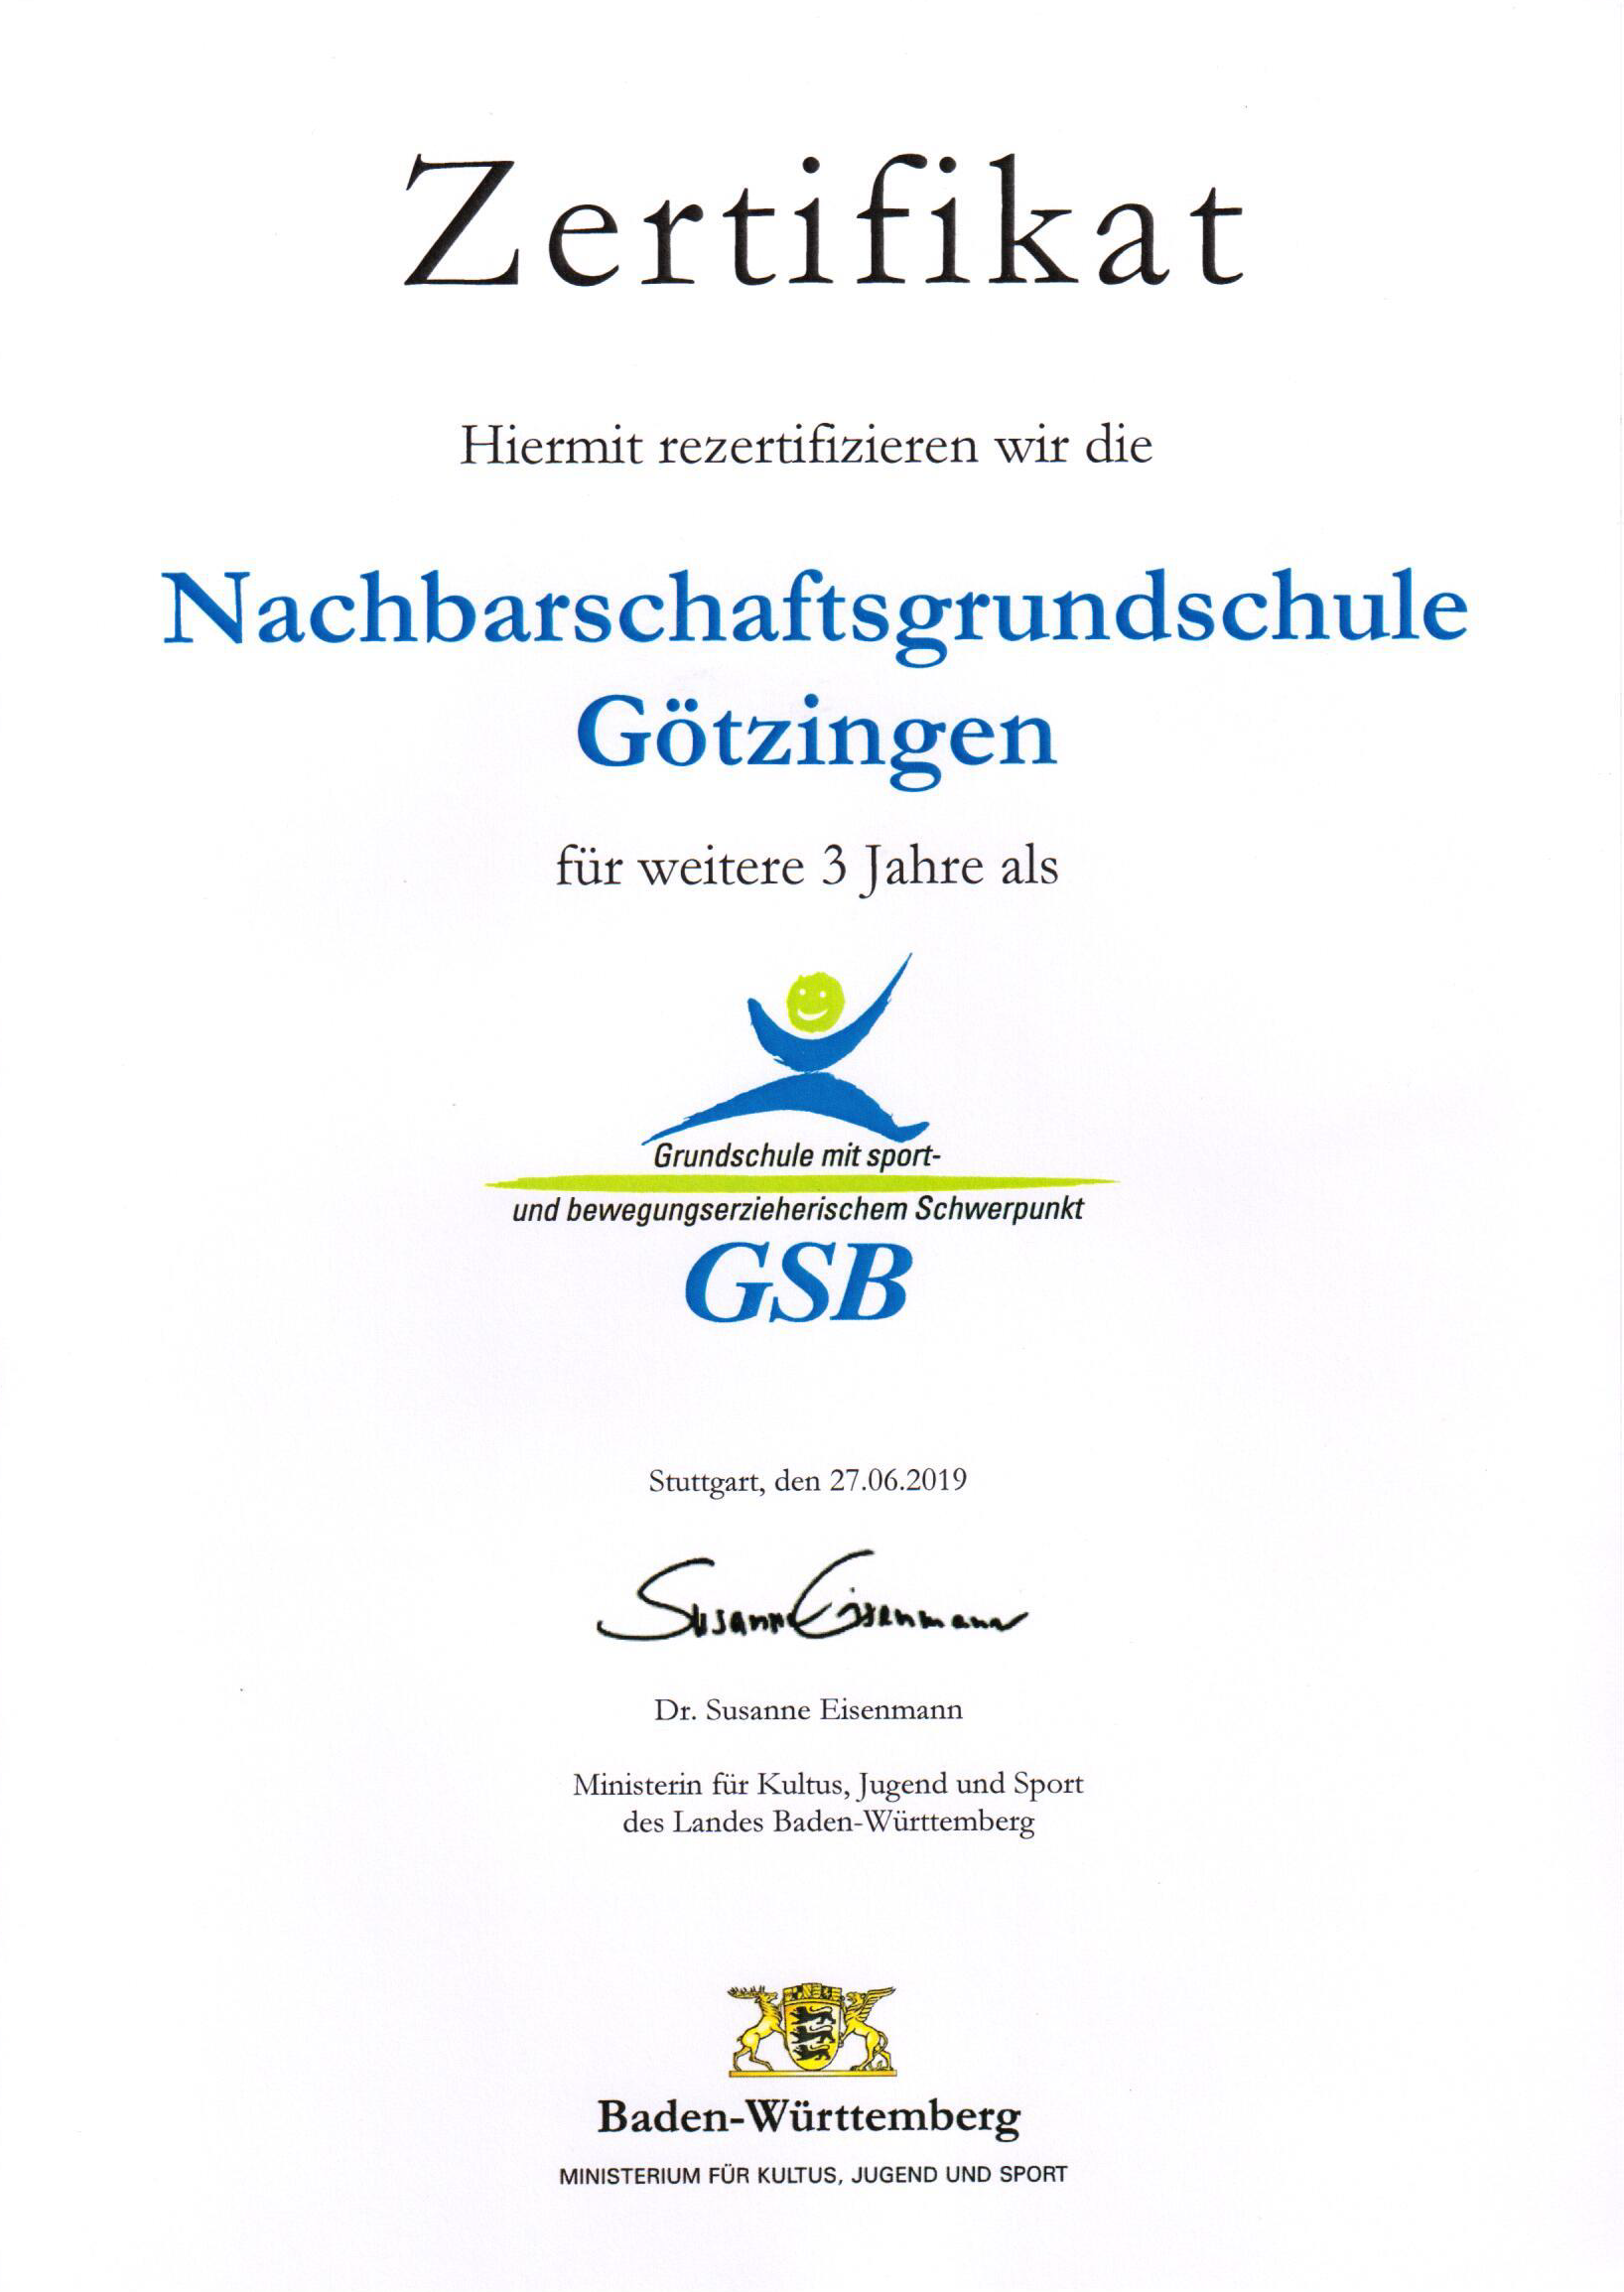 GSB Zertifikat 2019